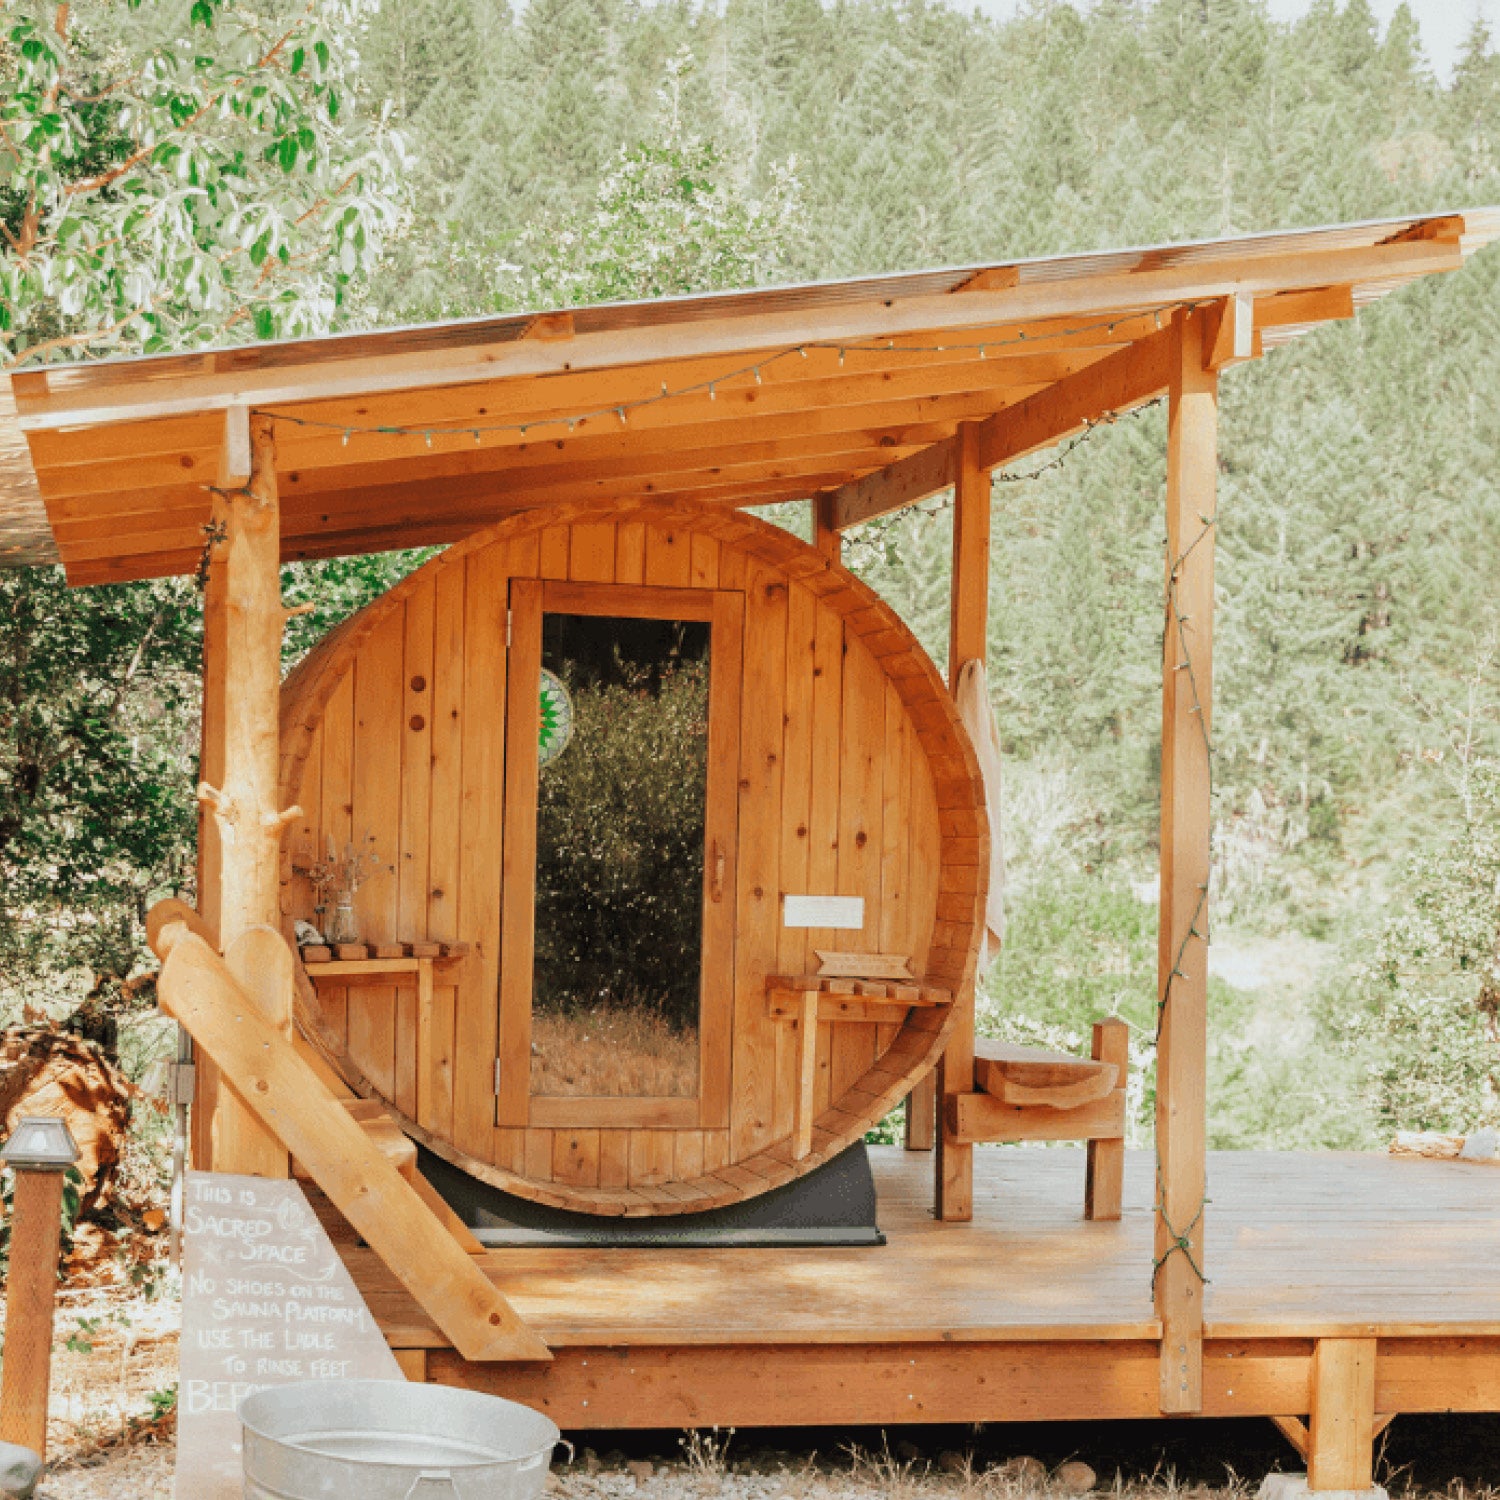 Exterior view of a cylindrical barrel sauna